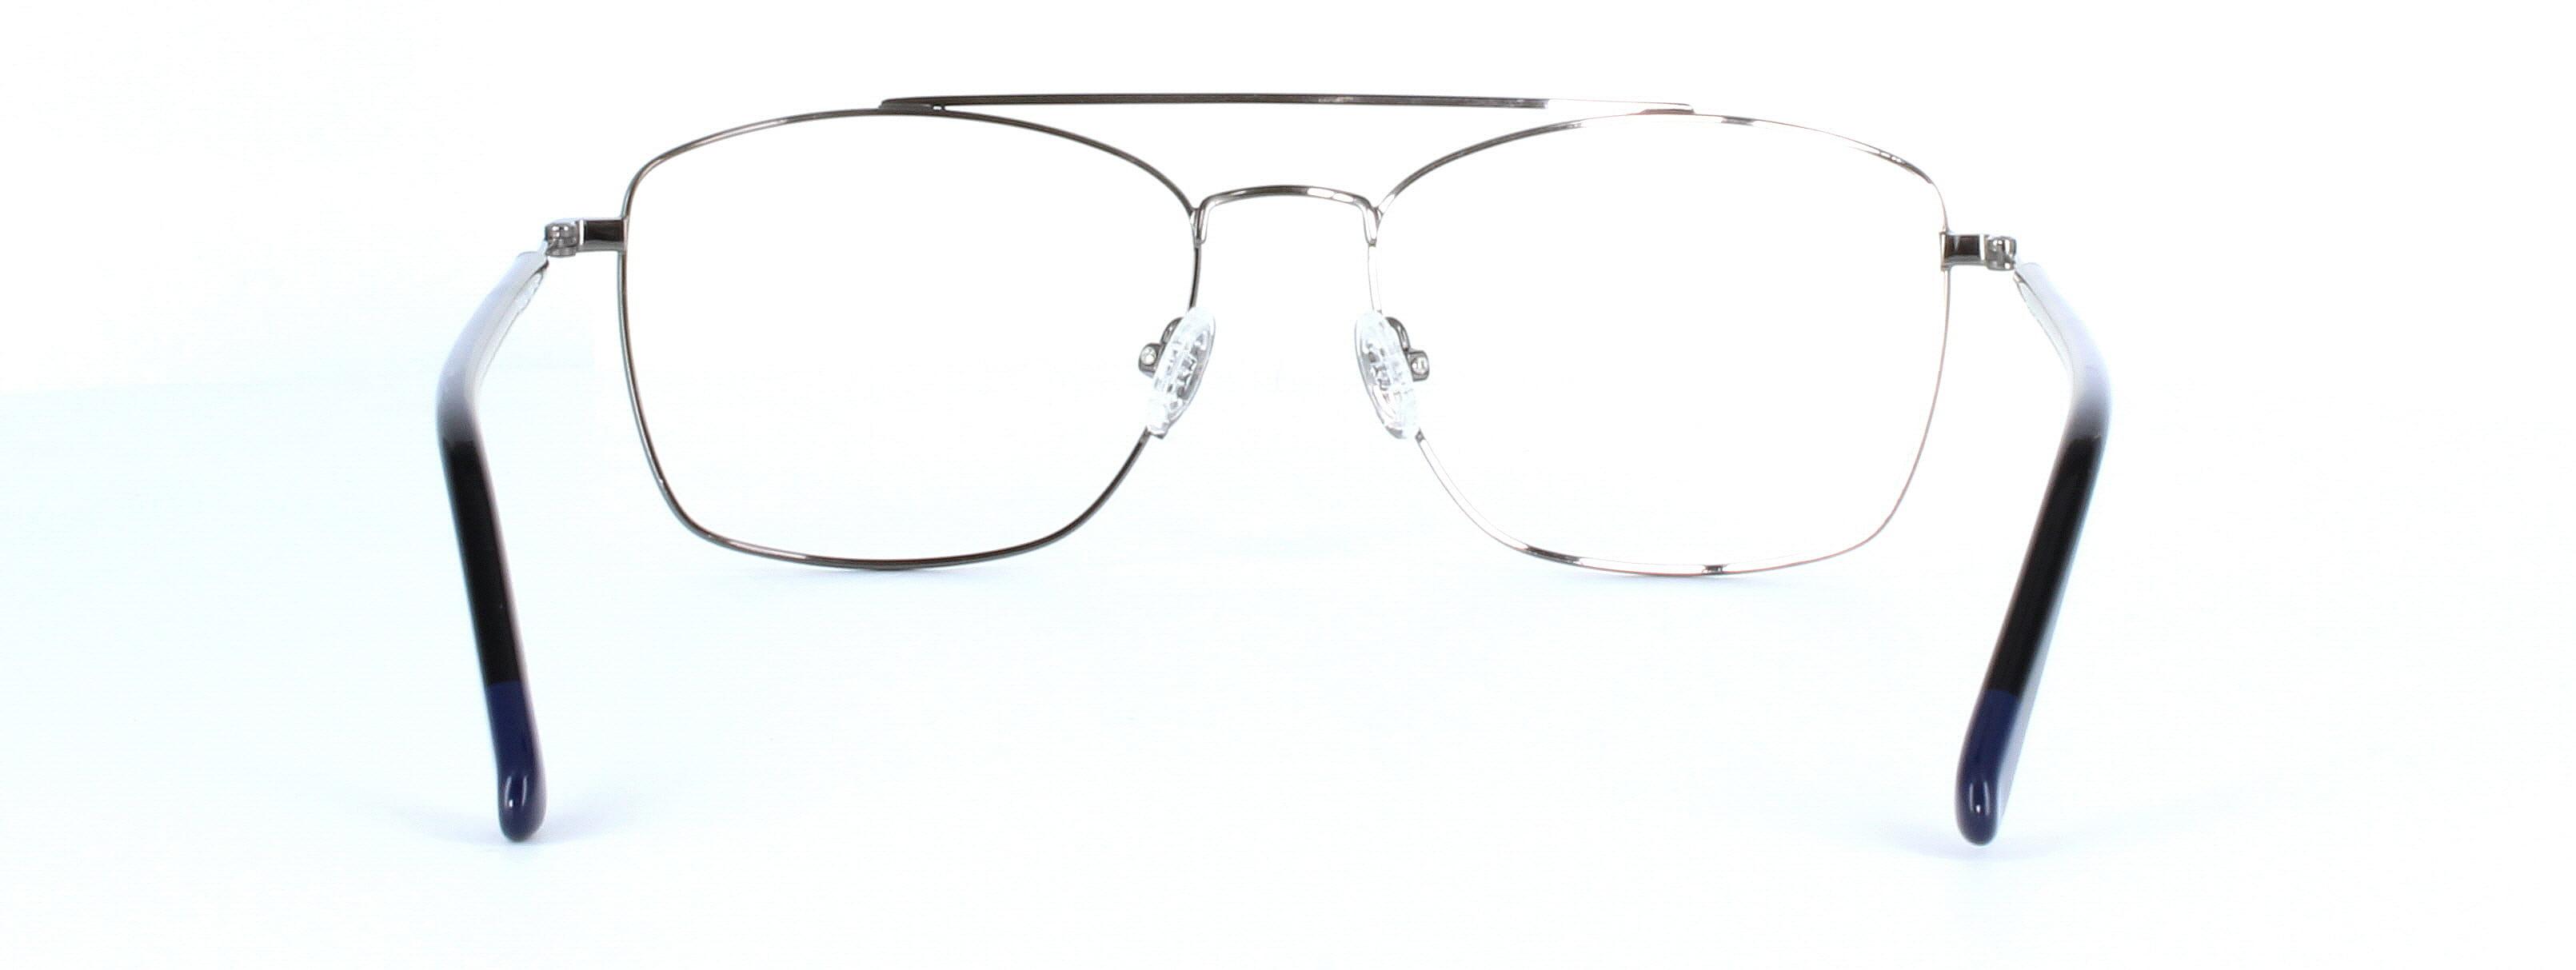 GANT 3194 - Gents aviator style metal glasses in gunmetal - image view 3